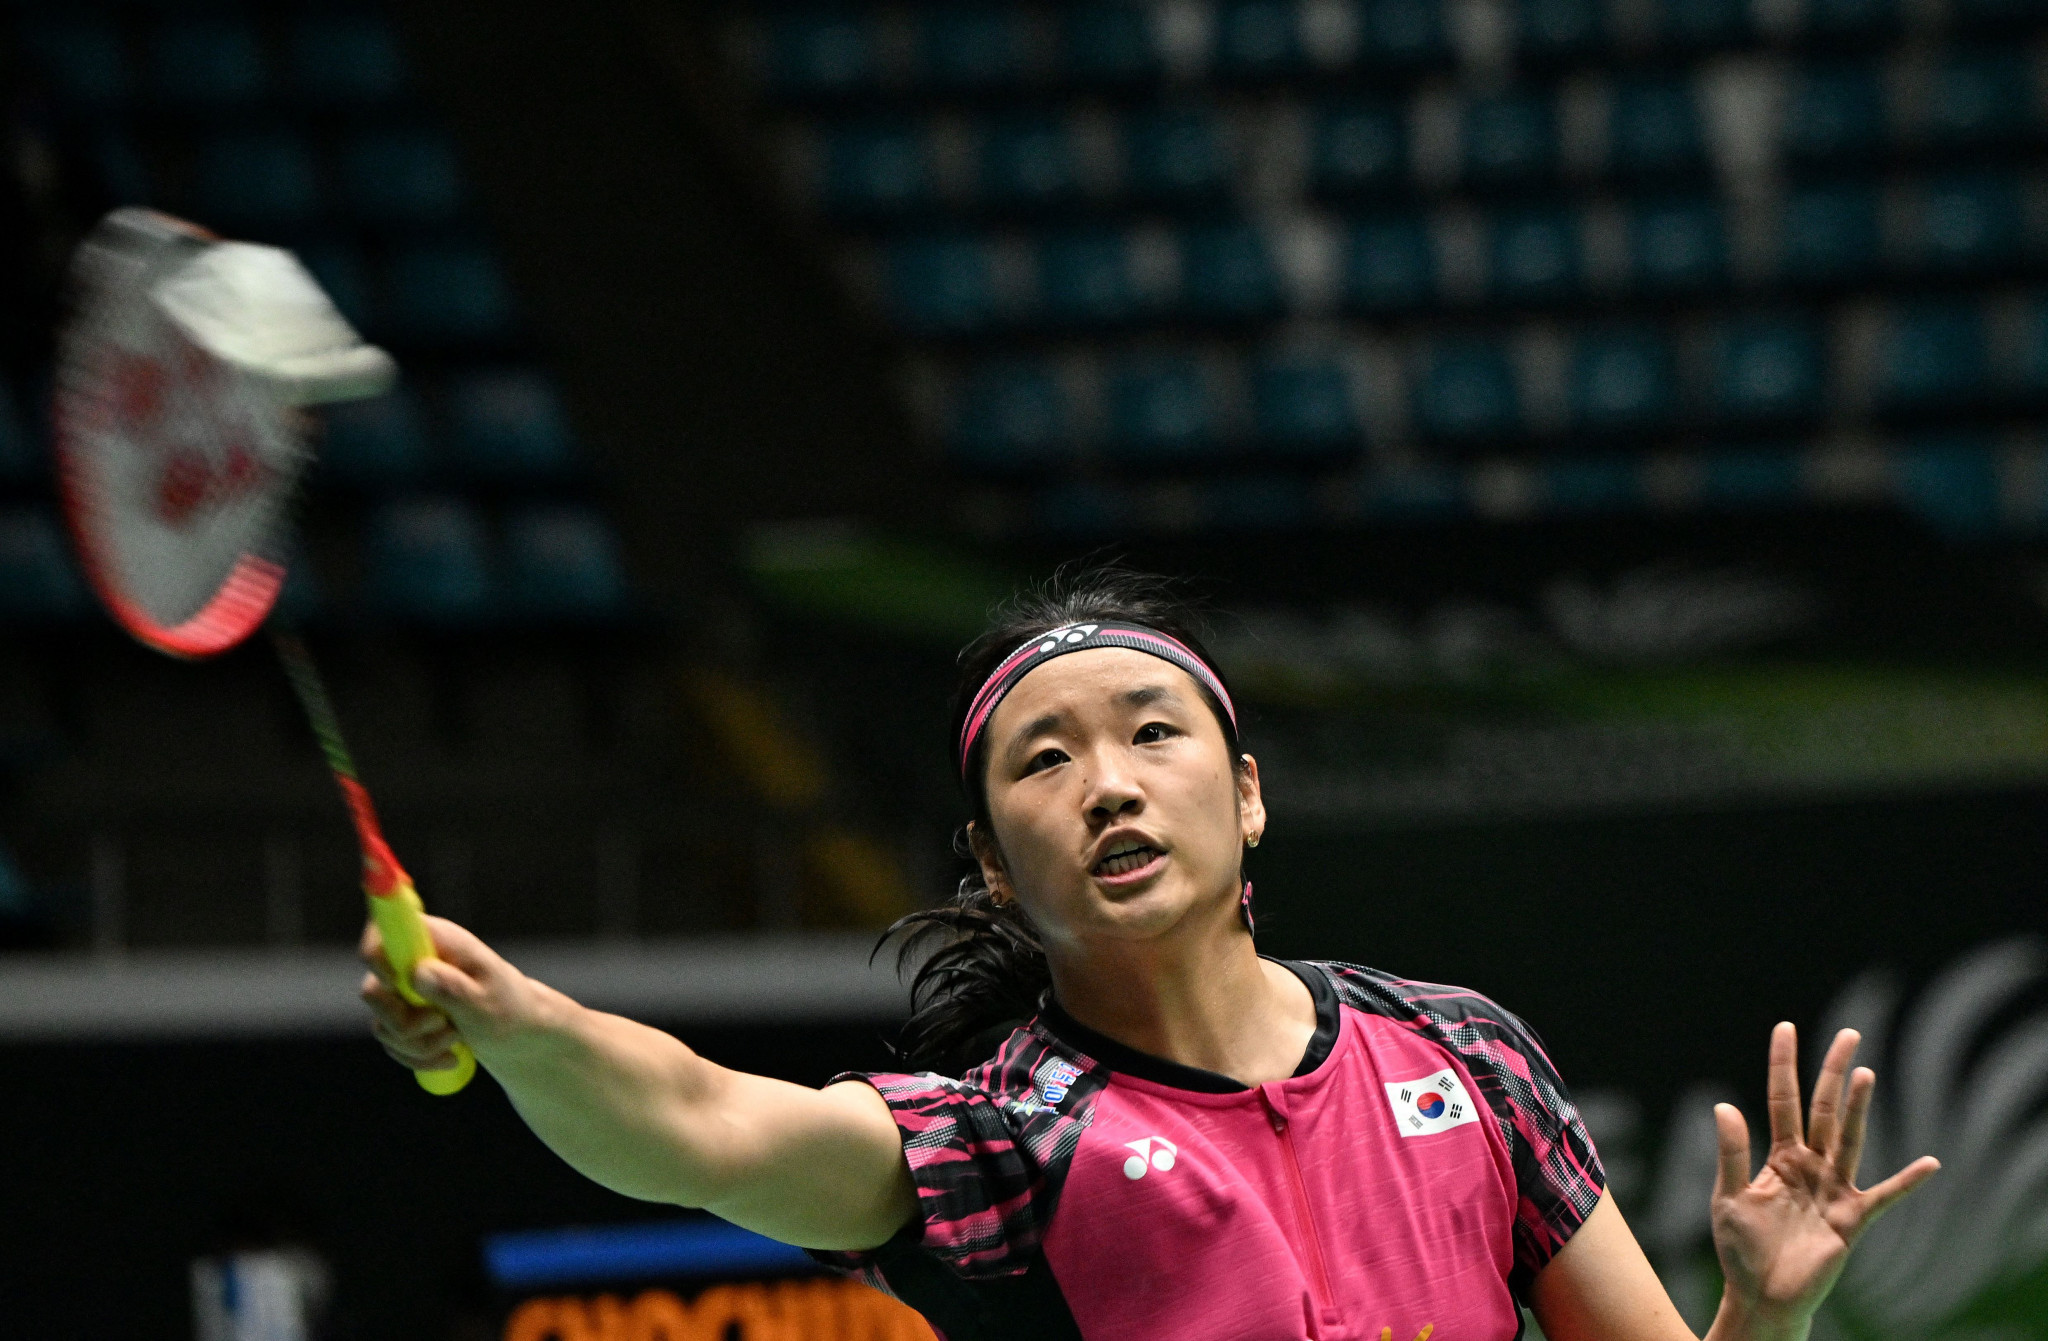 Widjaja progresses through Badminton Asia Championships to set up tie against An